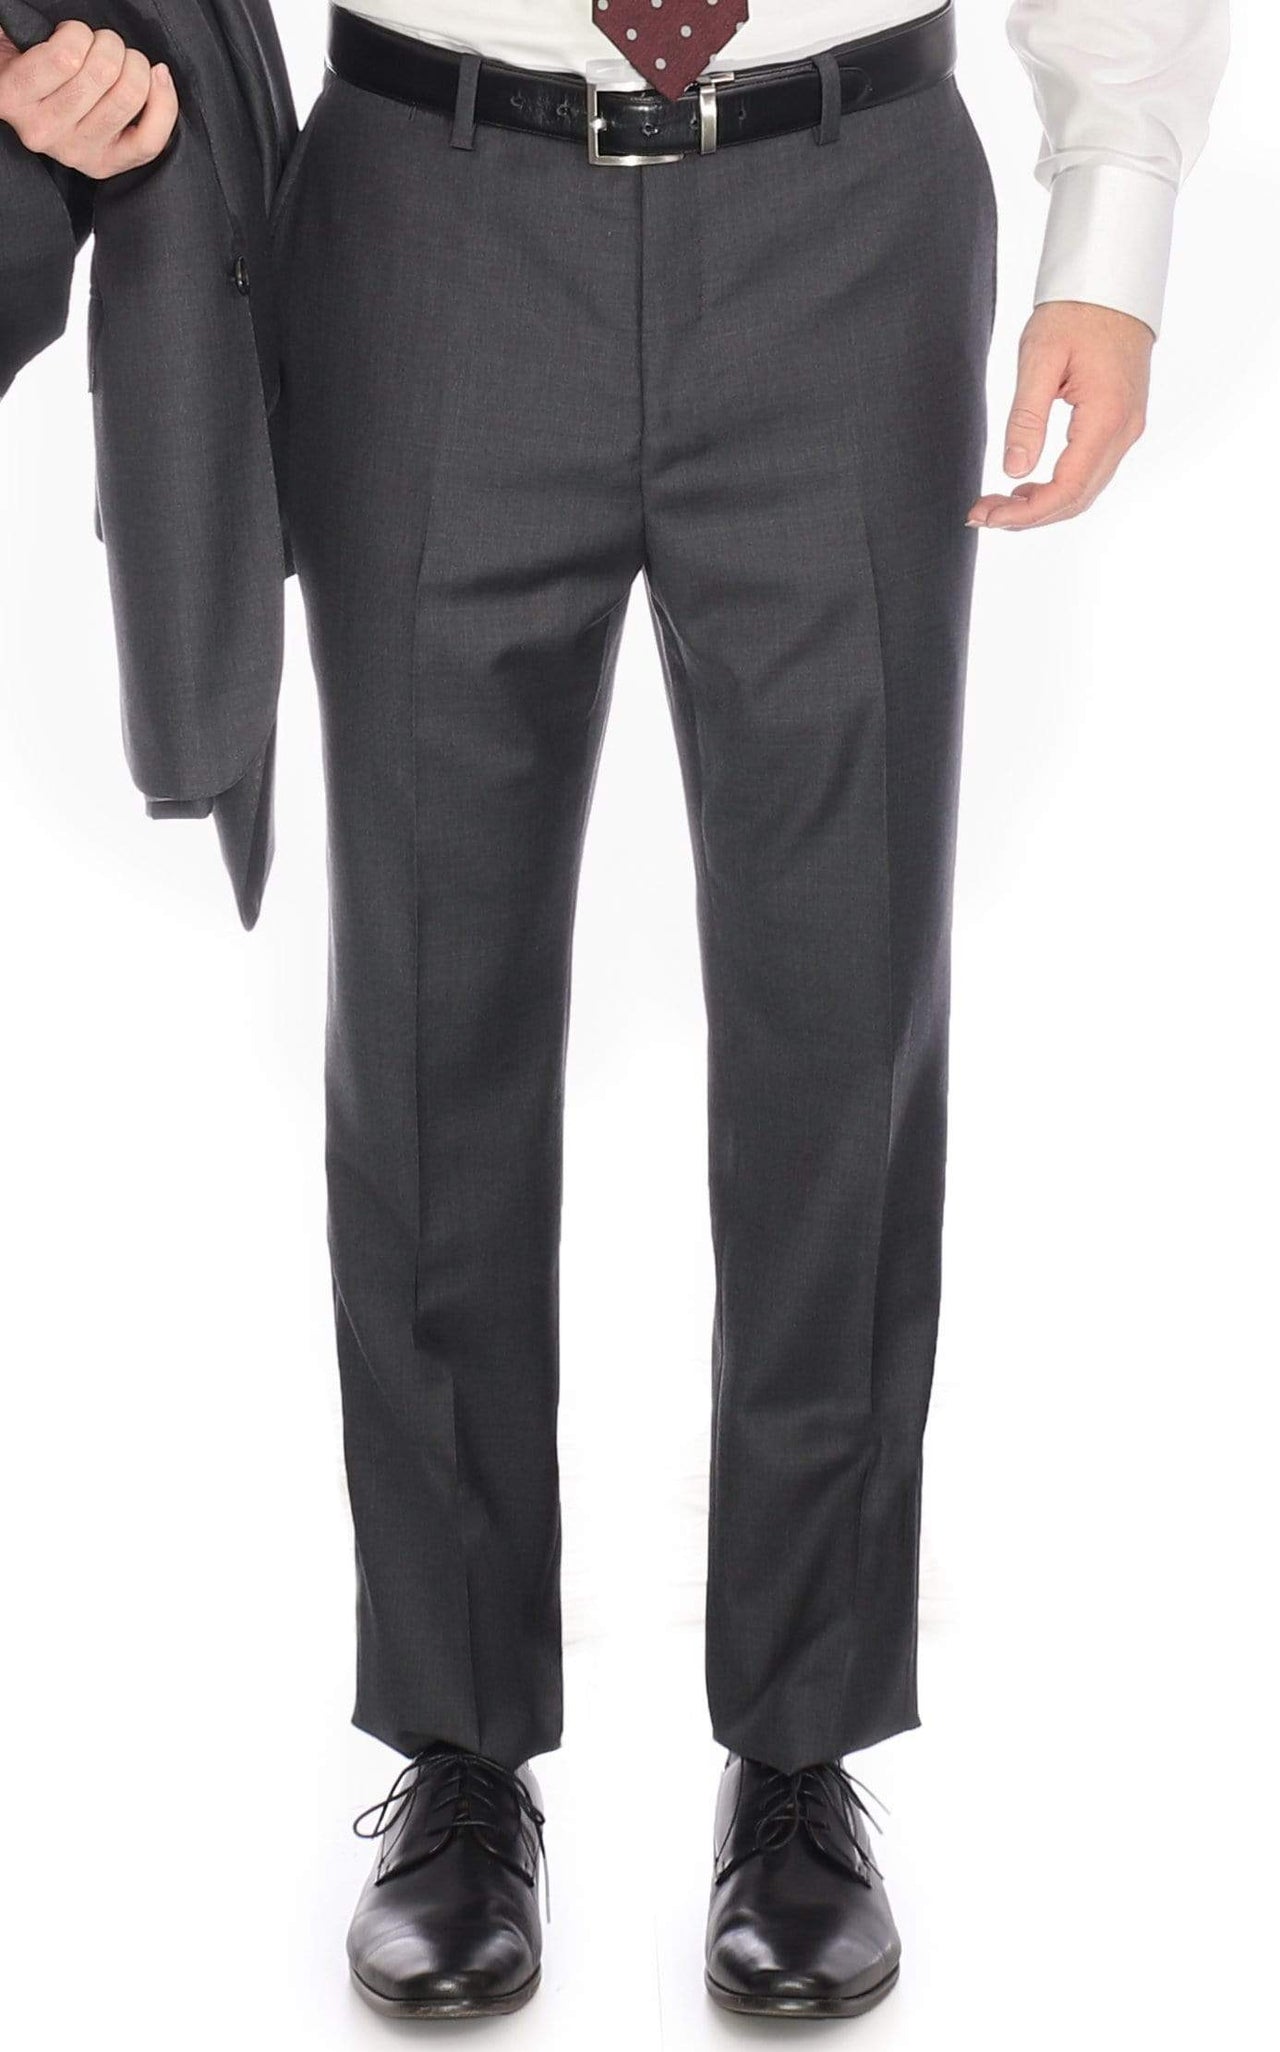 Blujacket PANTS Men's Blujacket Charcoal Grey 100% Wool Slim Fit Dress Pants